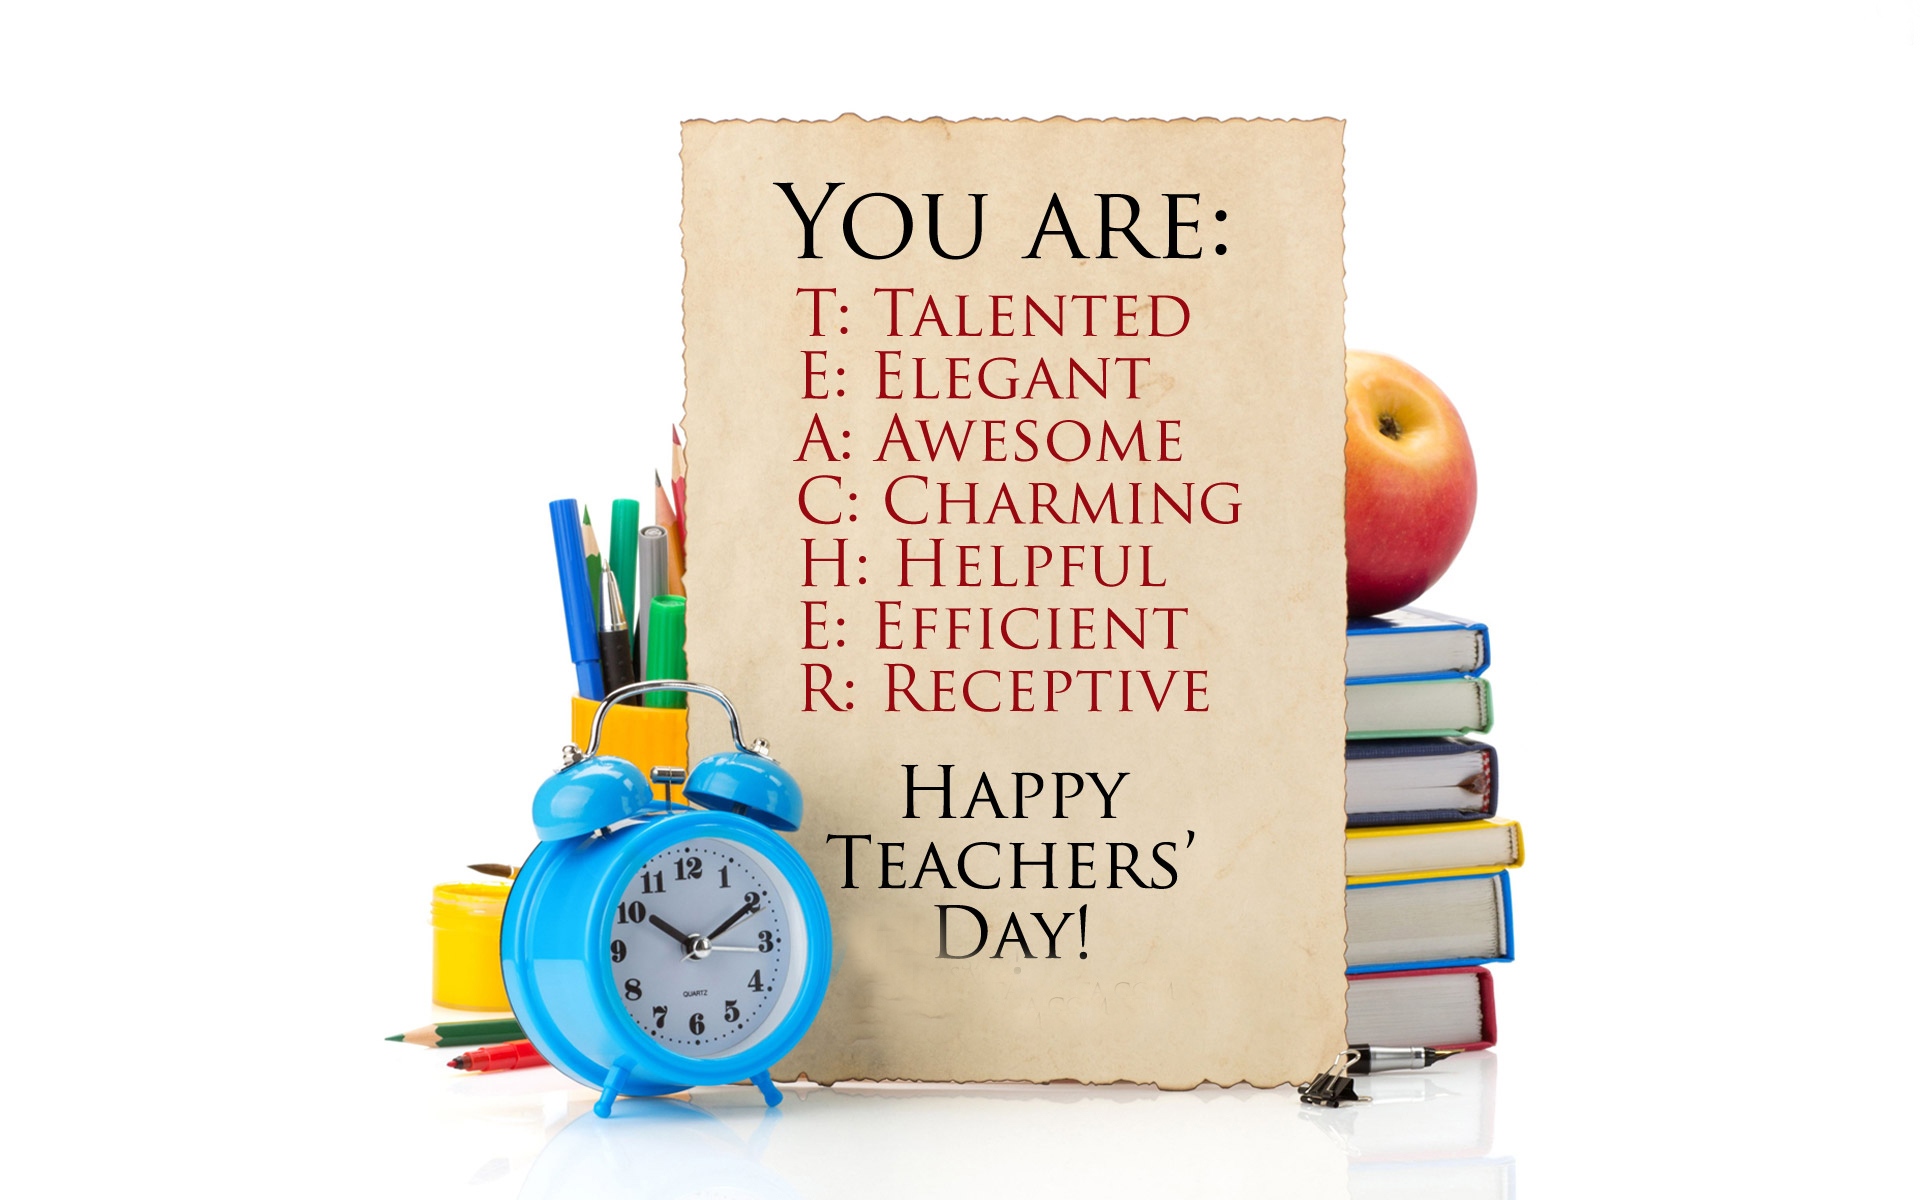 Happy Teachers Day - talented teacher